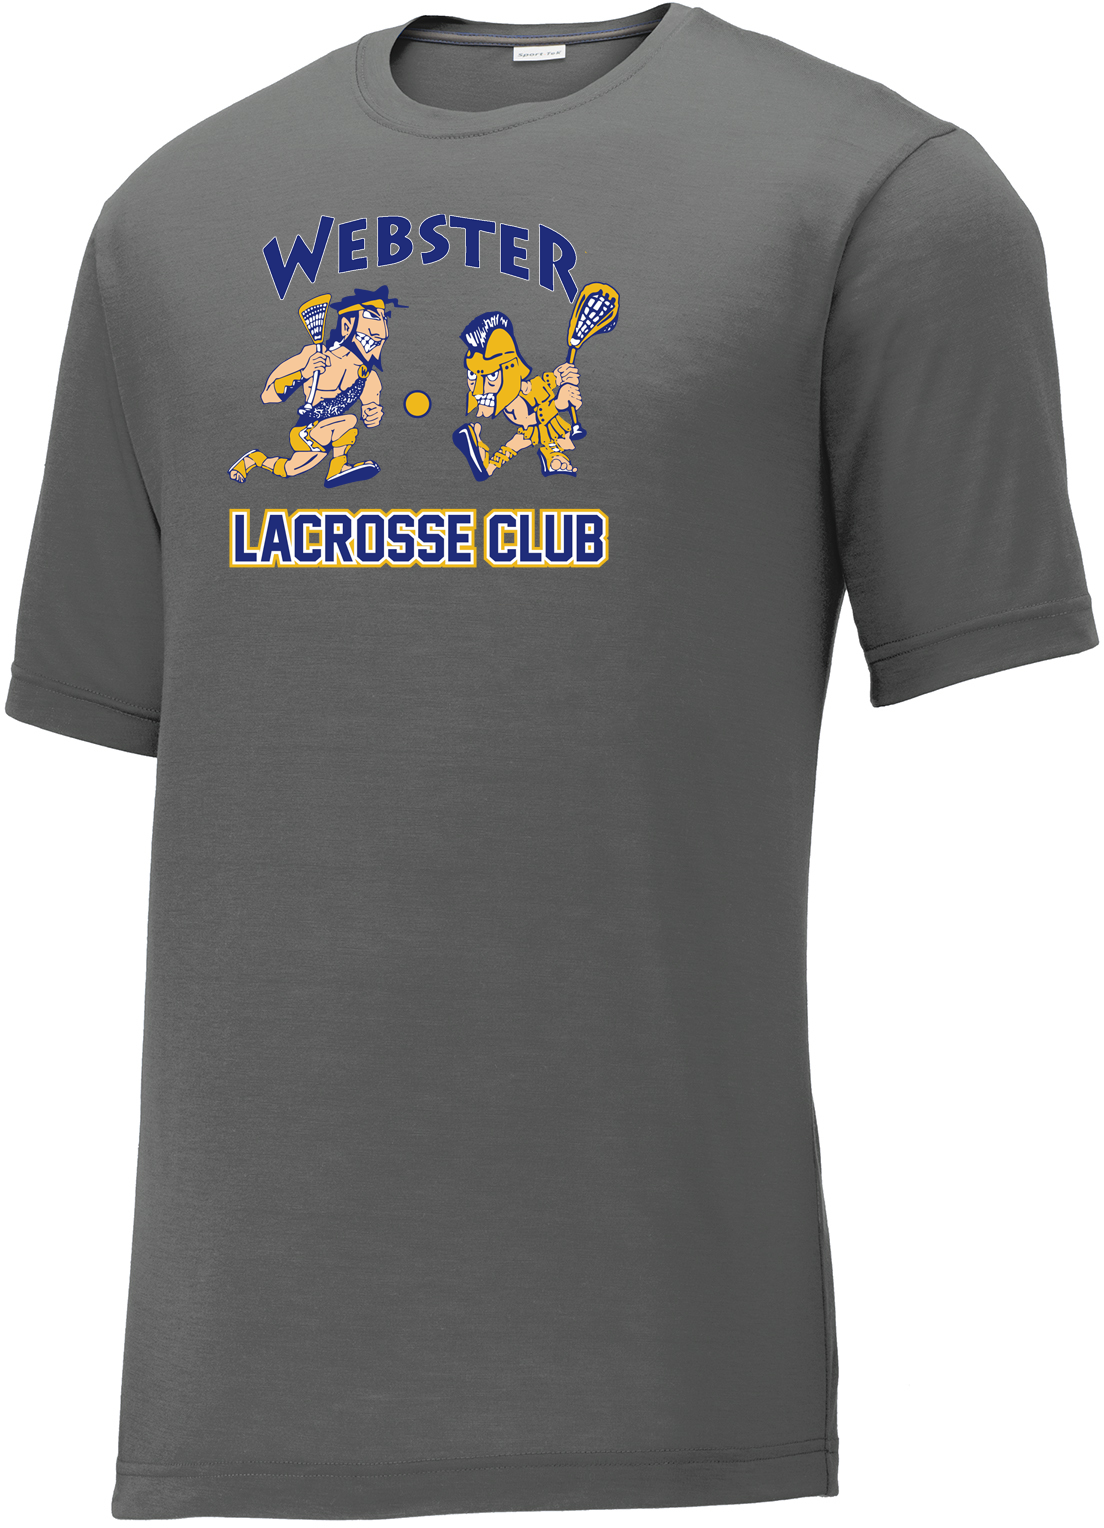 Webster Lacrosse Men's Grey CottonTouch Performance T-Shirt